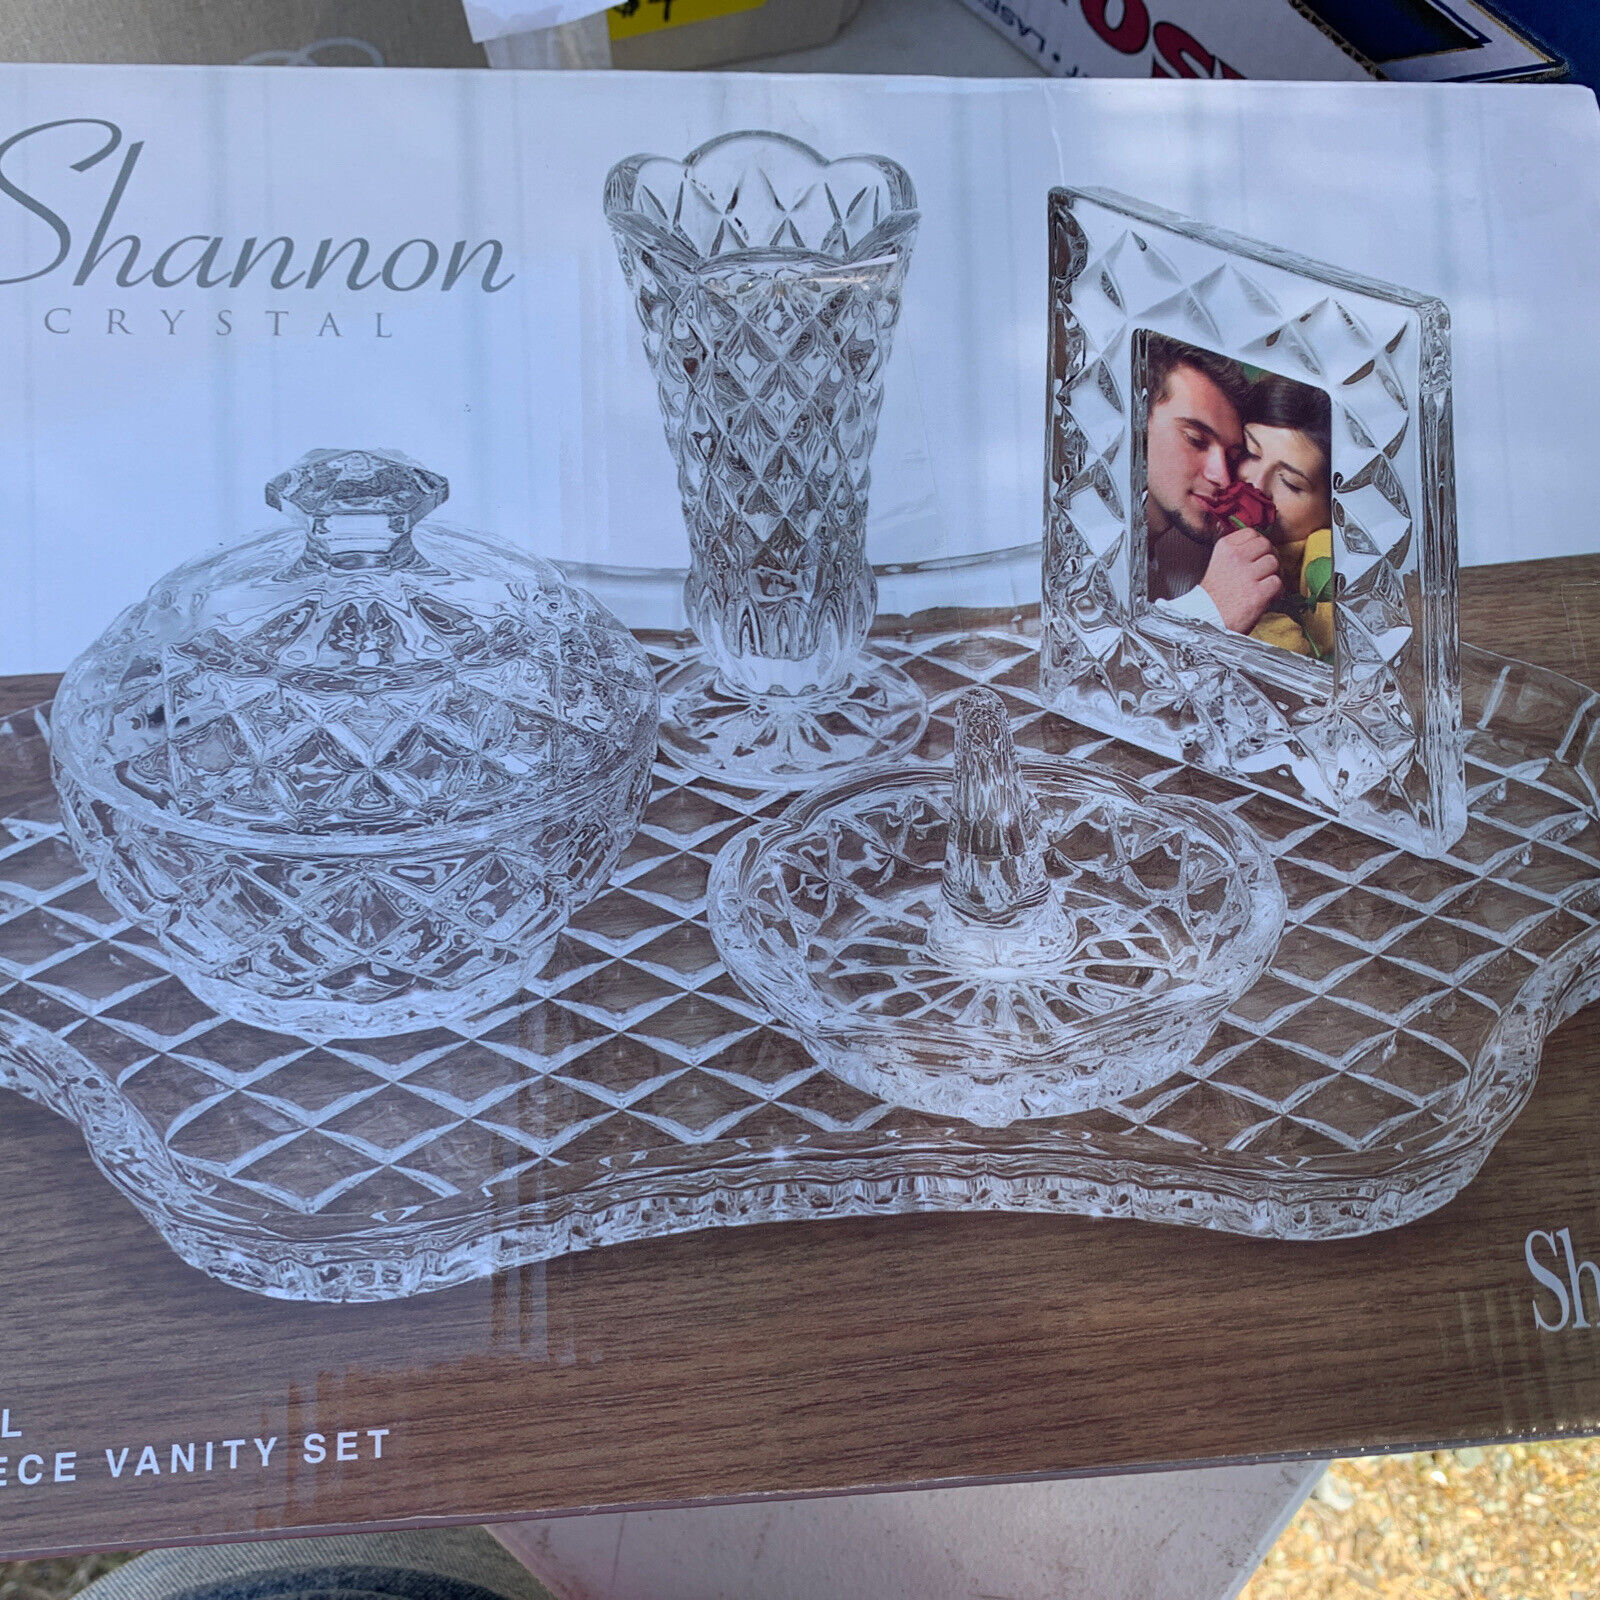 Shannon Crystal Vanity Set